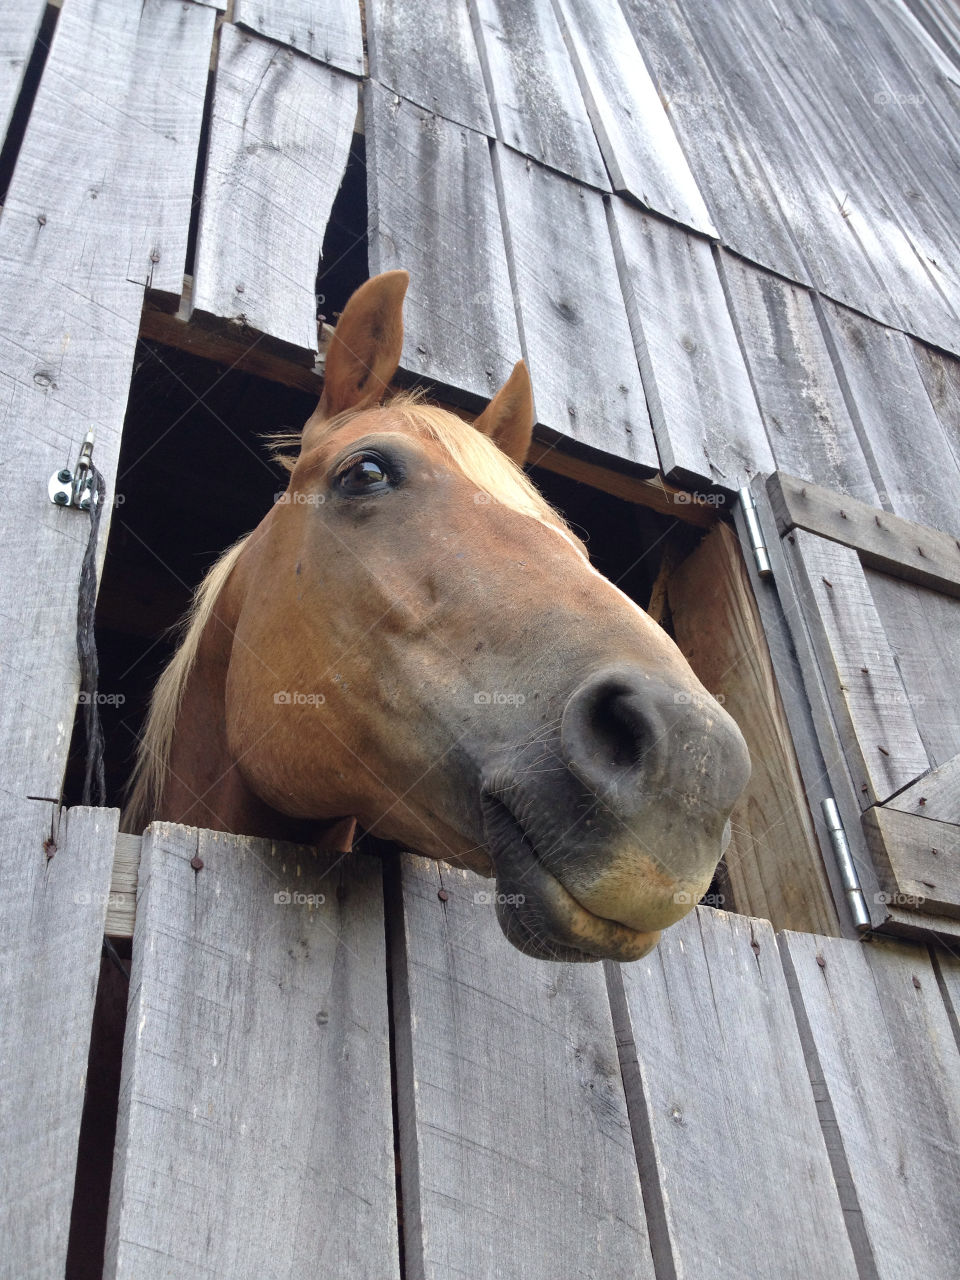 face mammals barn horse by hollyau92